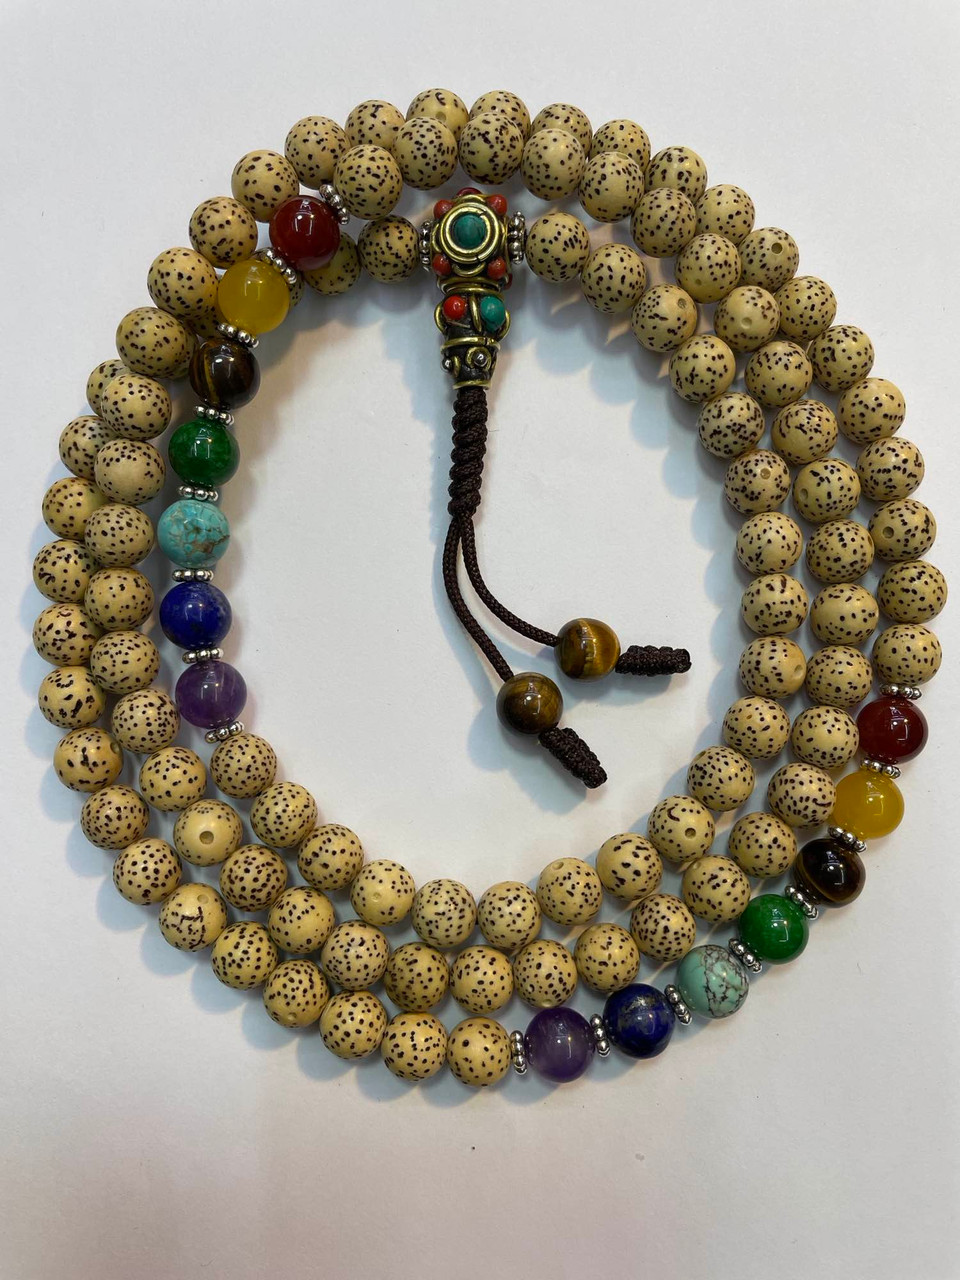 How to Use Buddhist Prayer Beads